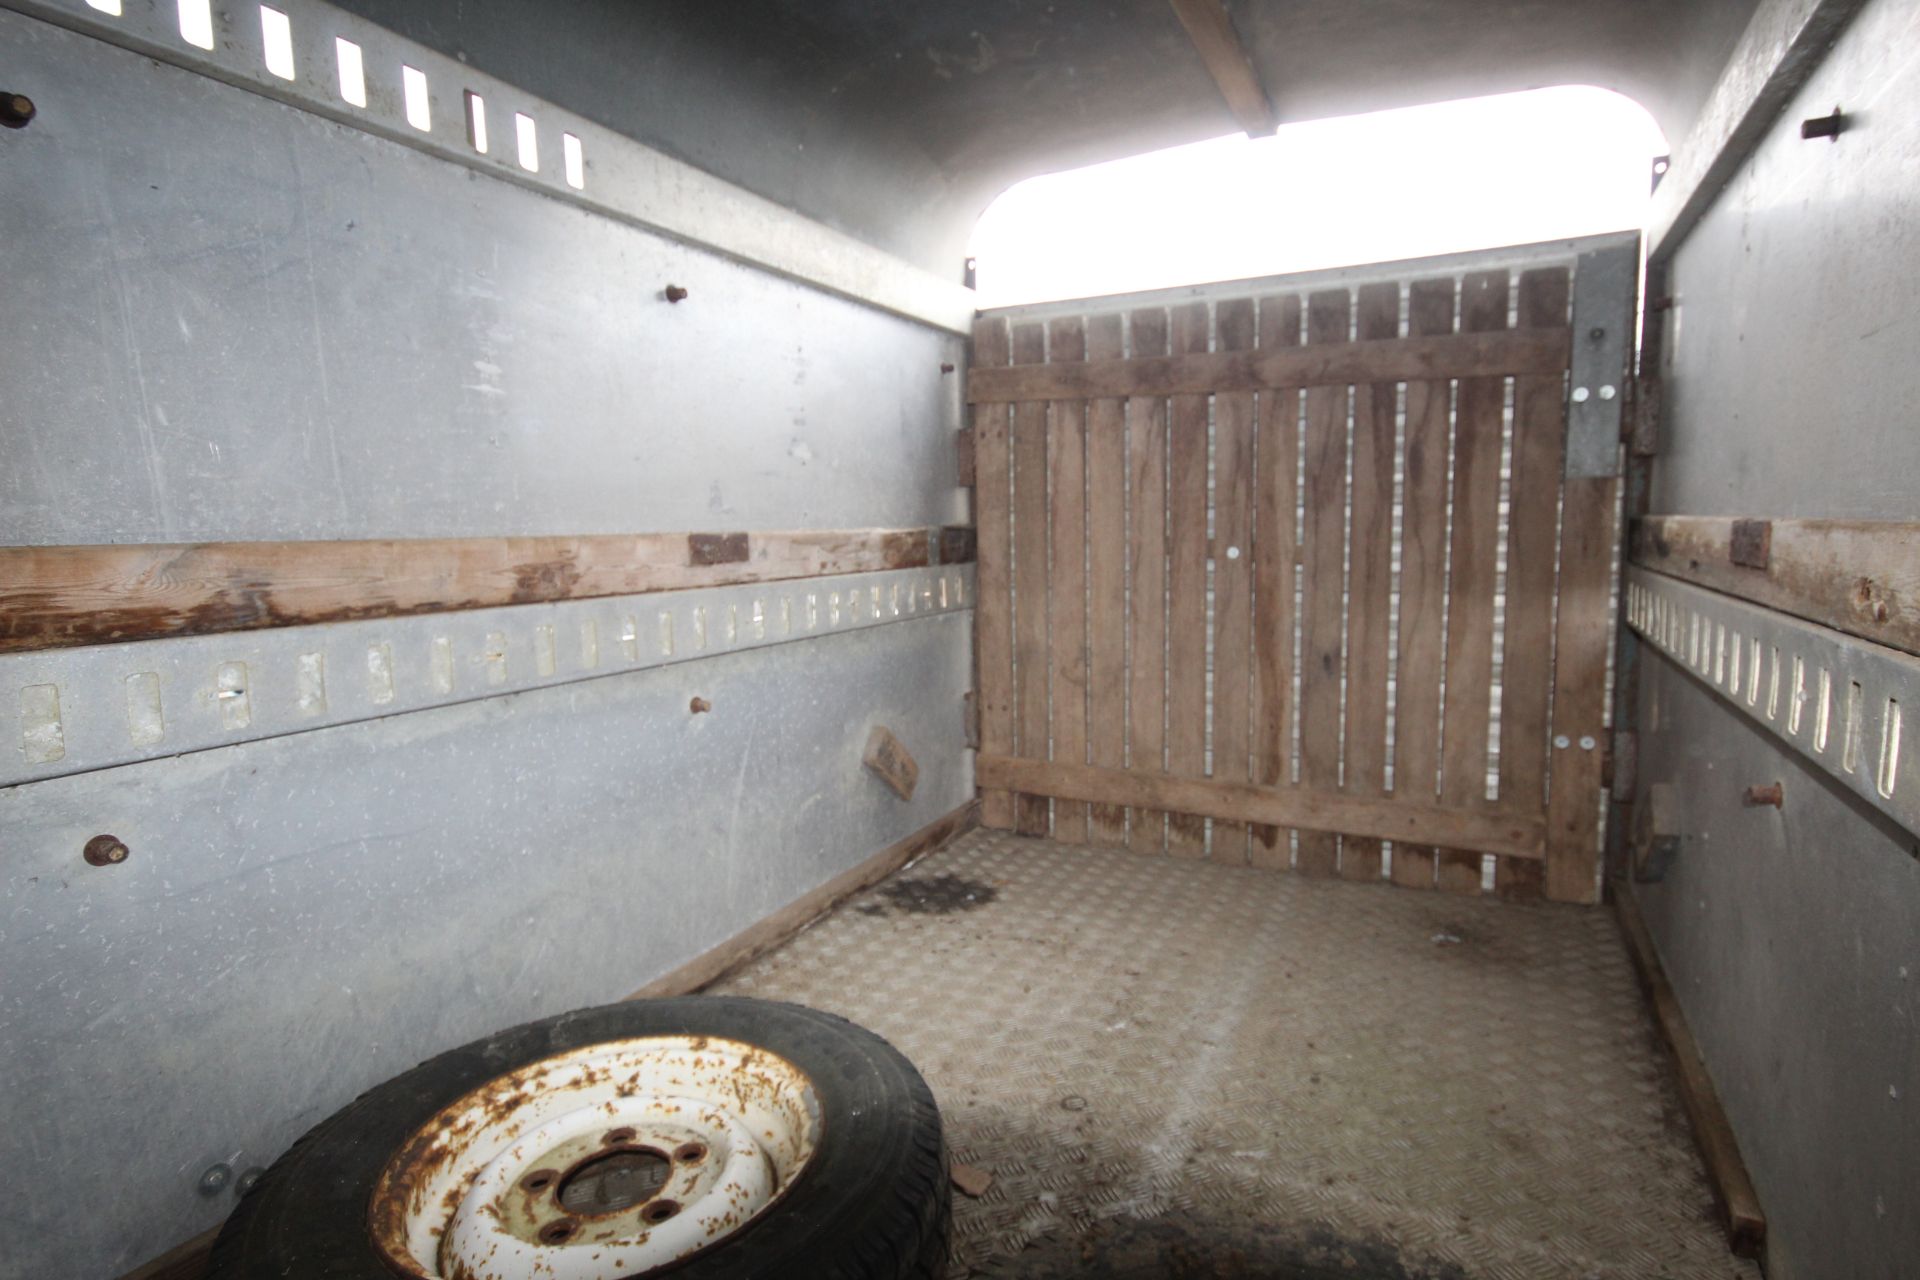 Twin axle livestock trailer. - Image 10 of 38